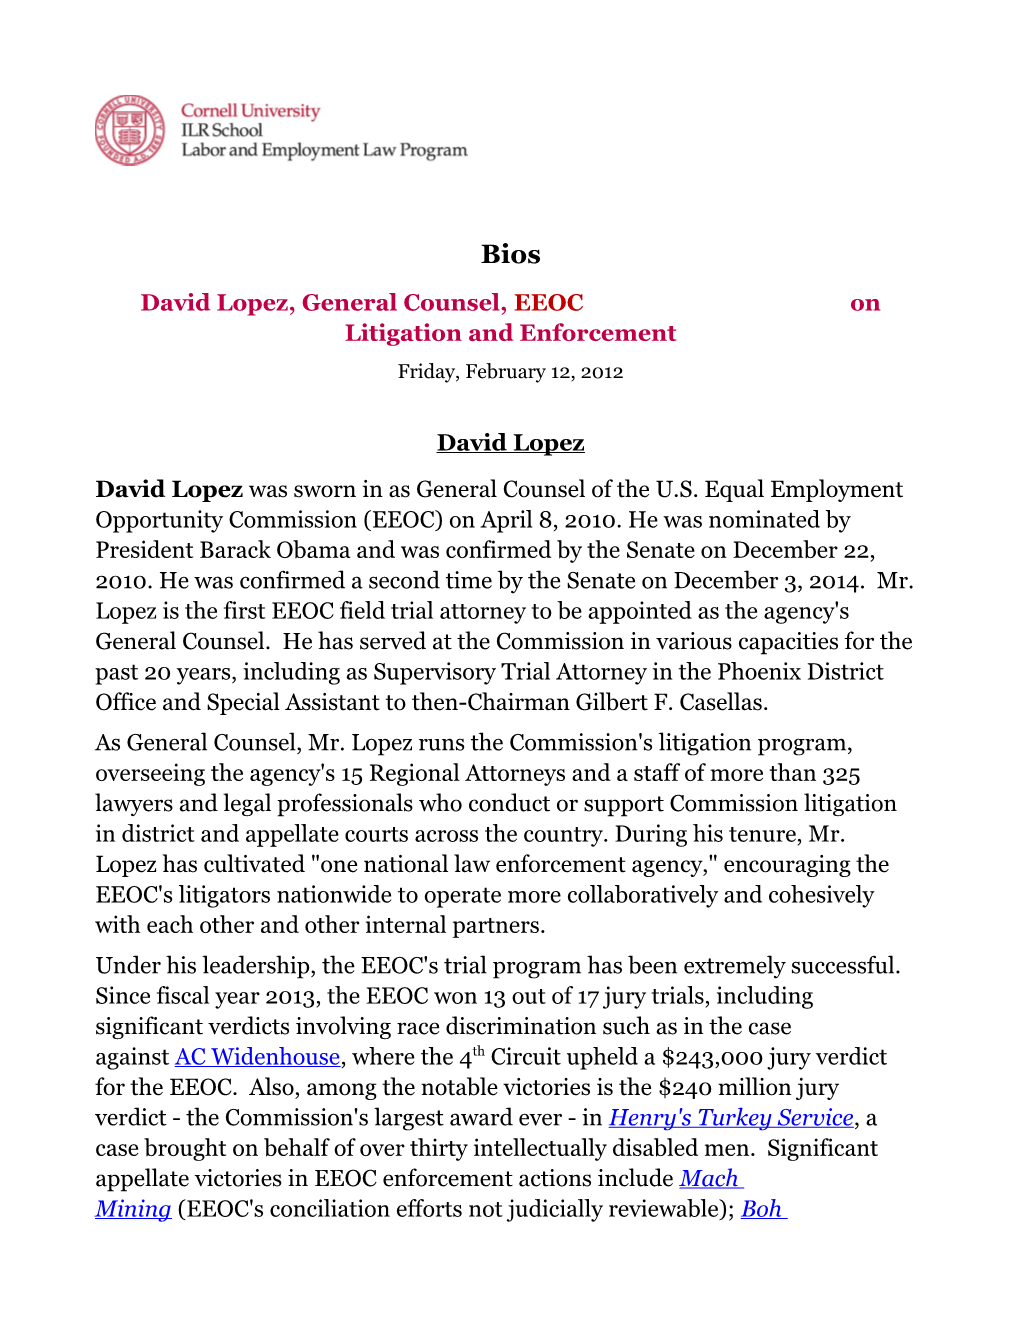 David Lopez, General Counsel, EEOC on Litigation and Enforcement